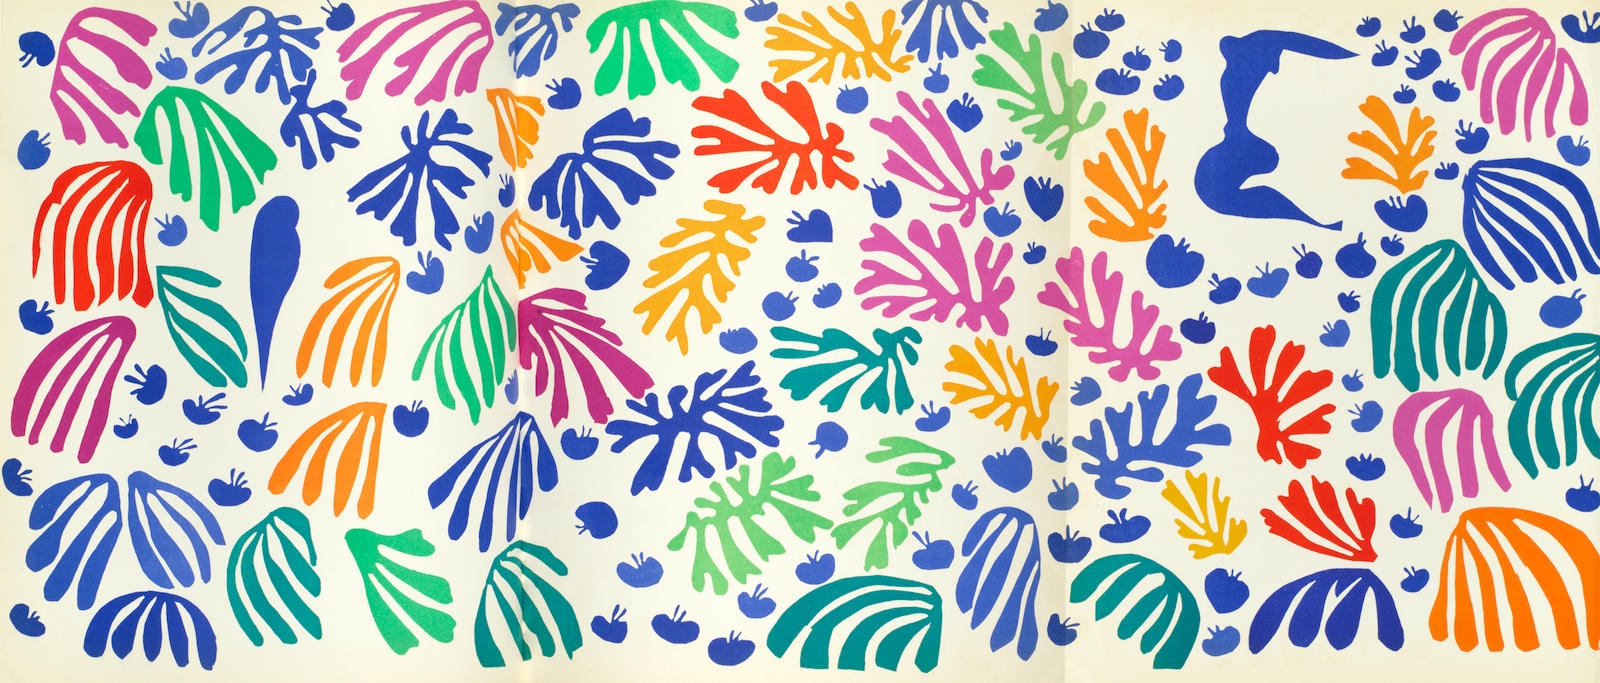 28 works: The Last Works of Henri (Verve: Volume IX Matisse, Nos 35 & 36) by Henri Matisse, 1950-1954